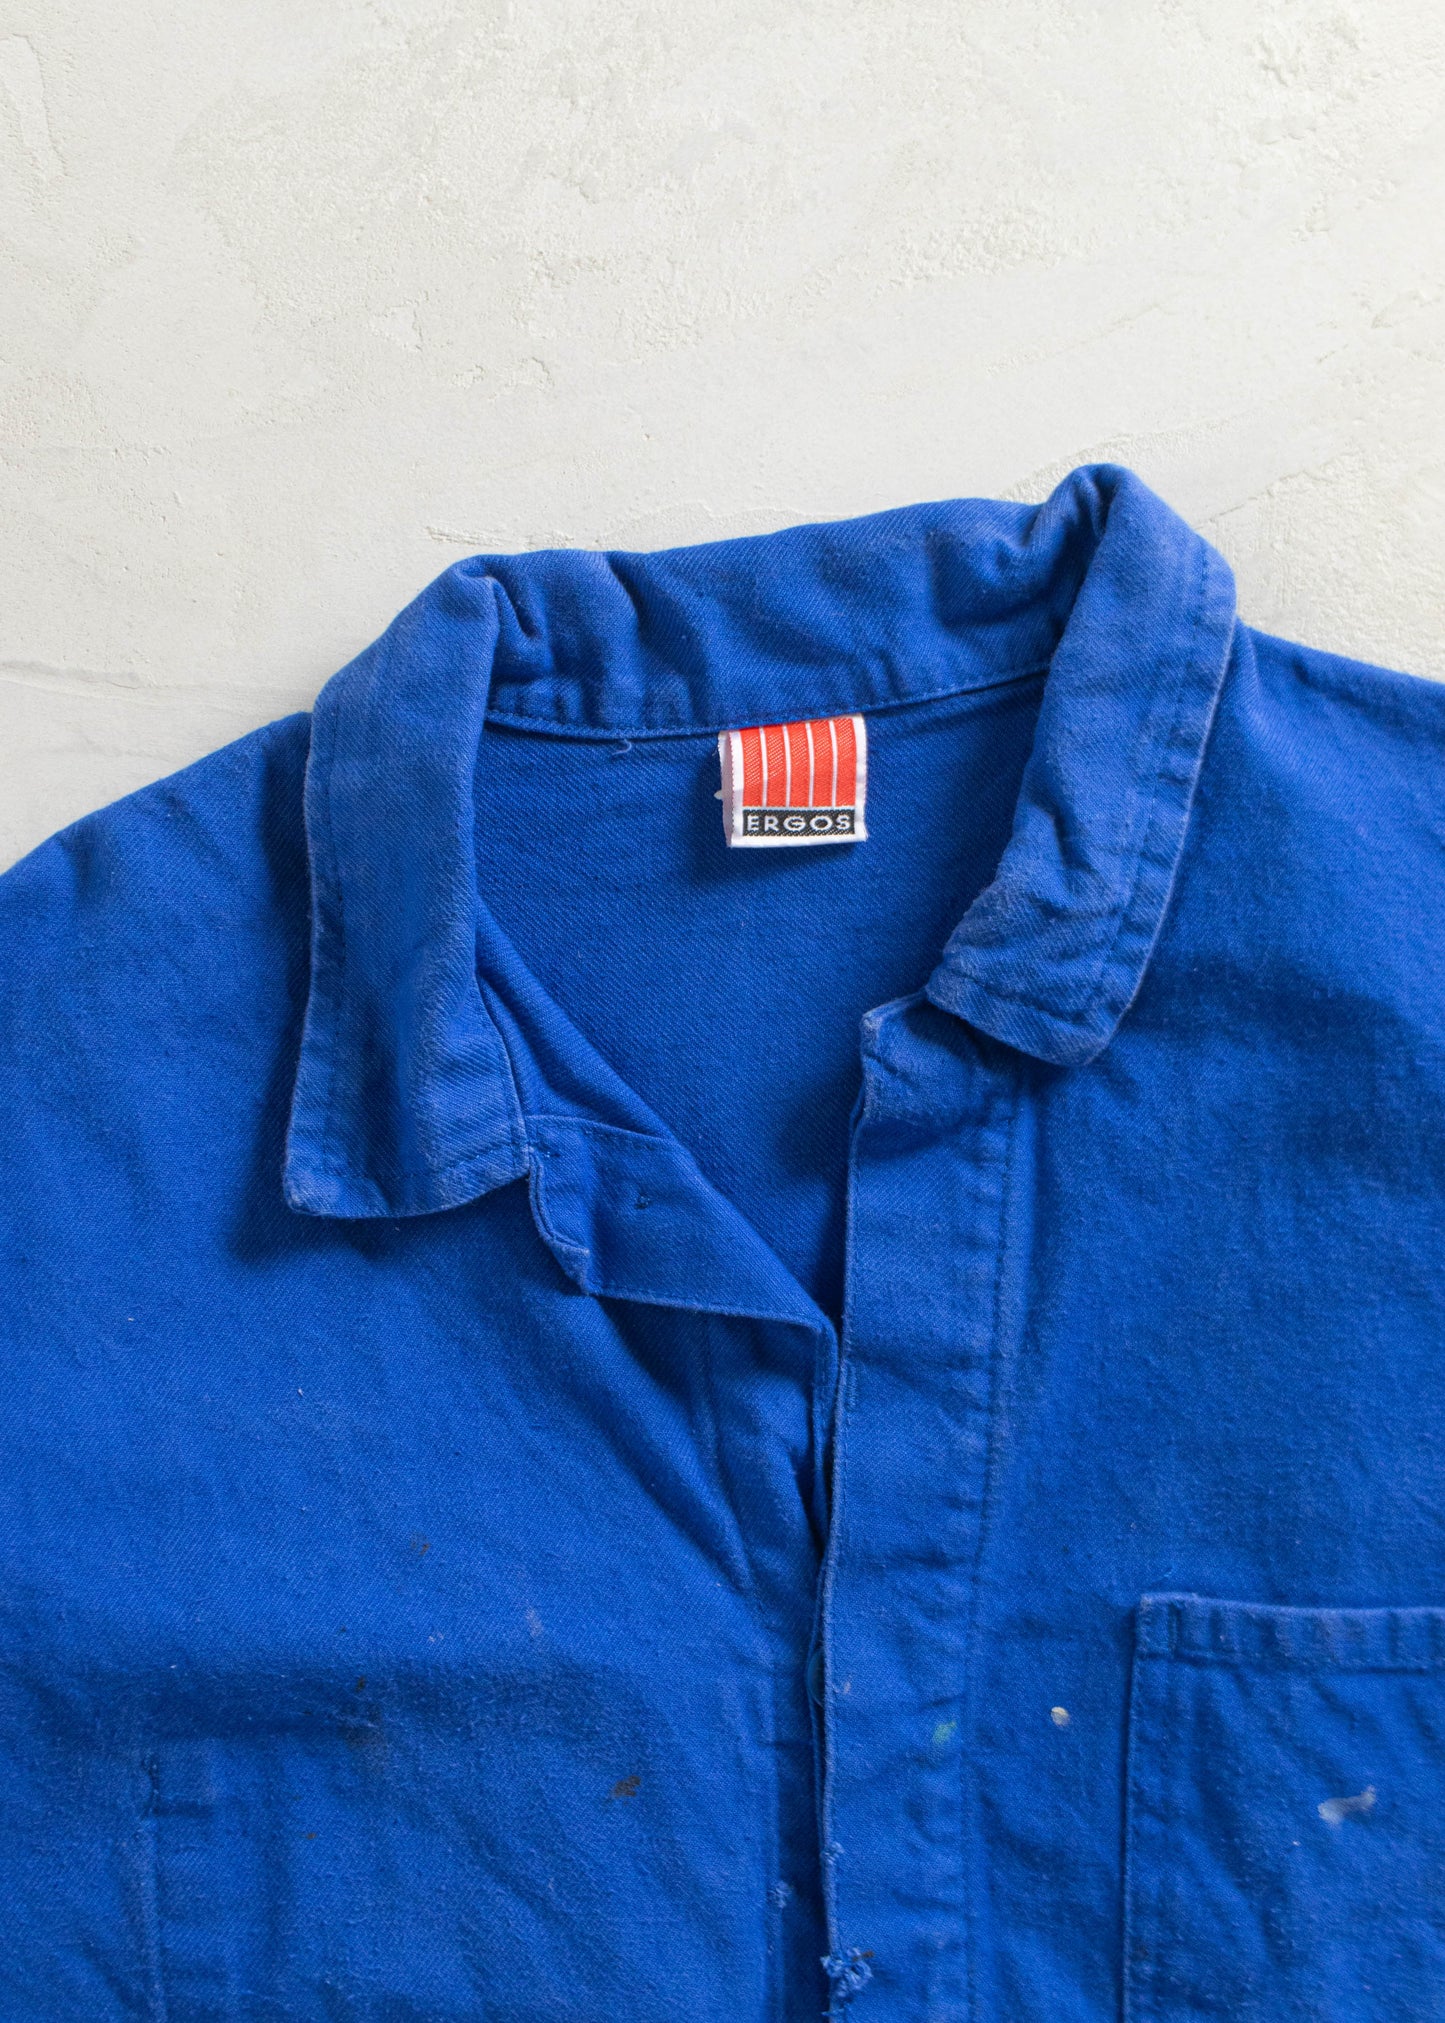 1980s Ergos Bleu de Travail French Workwear Chore Jacket Size M/L